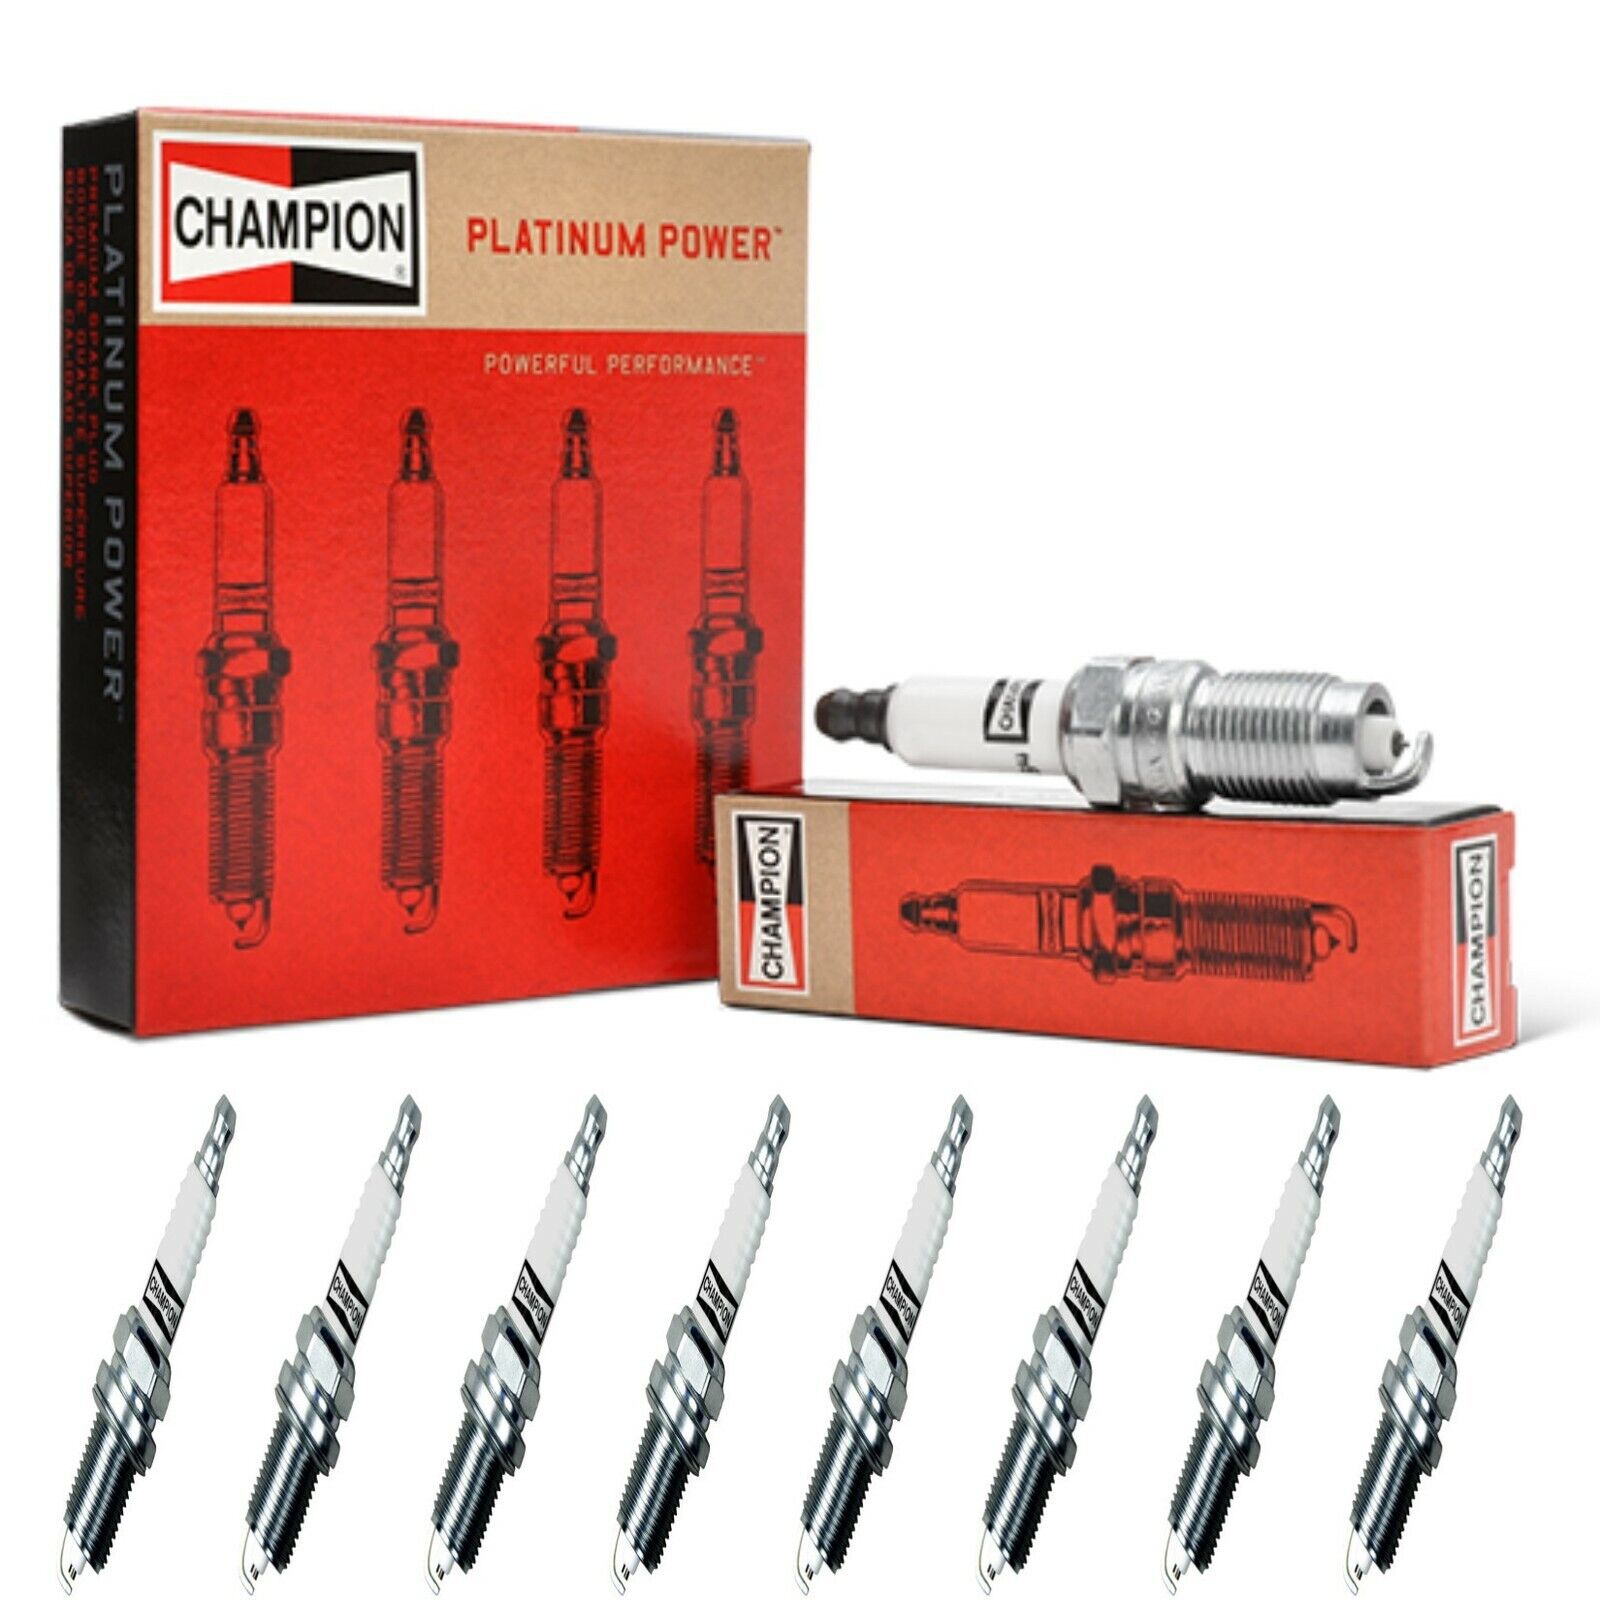 8 Champion Platinum Spark Plugs Set for FORD EXPEDITION 1997-2004 V8-5.4L